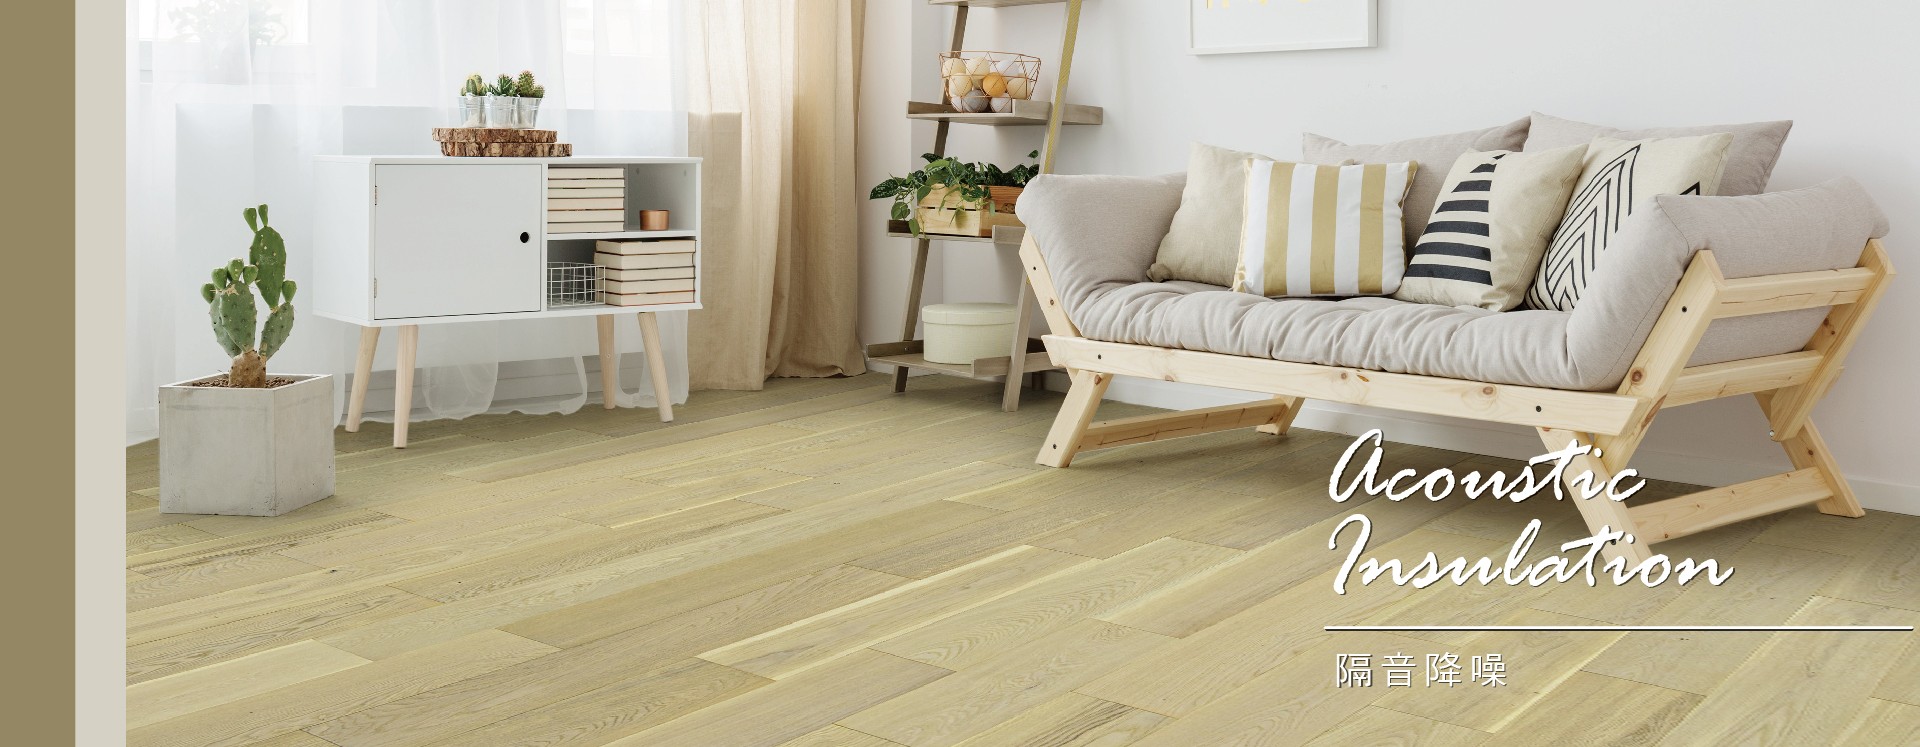 Ua Floors - 健康能量木地板|地板隔音與降噪